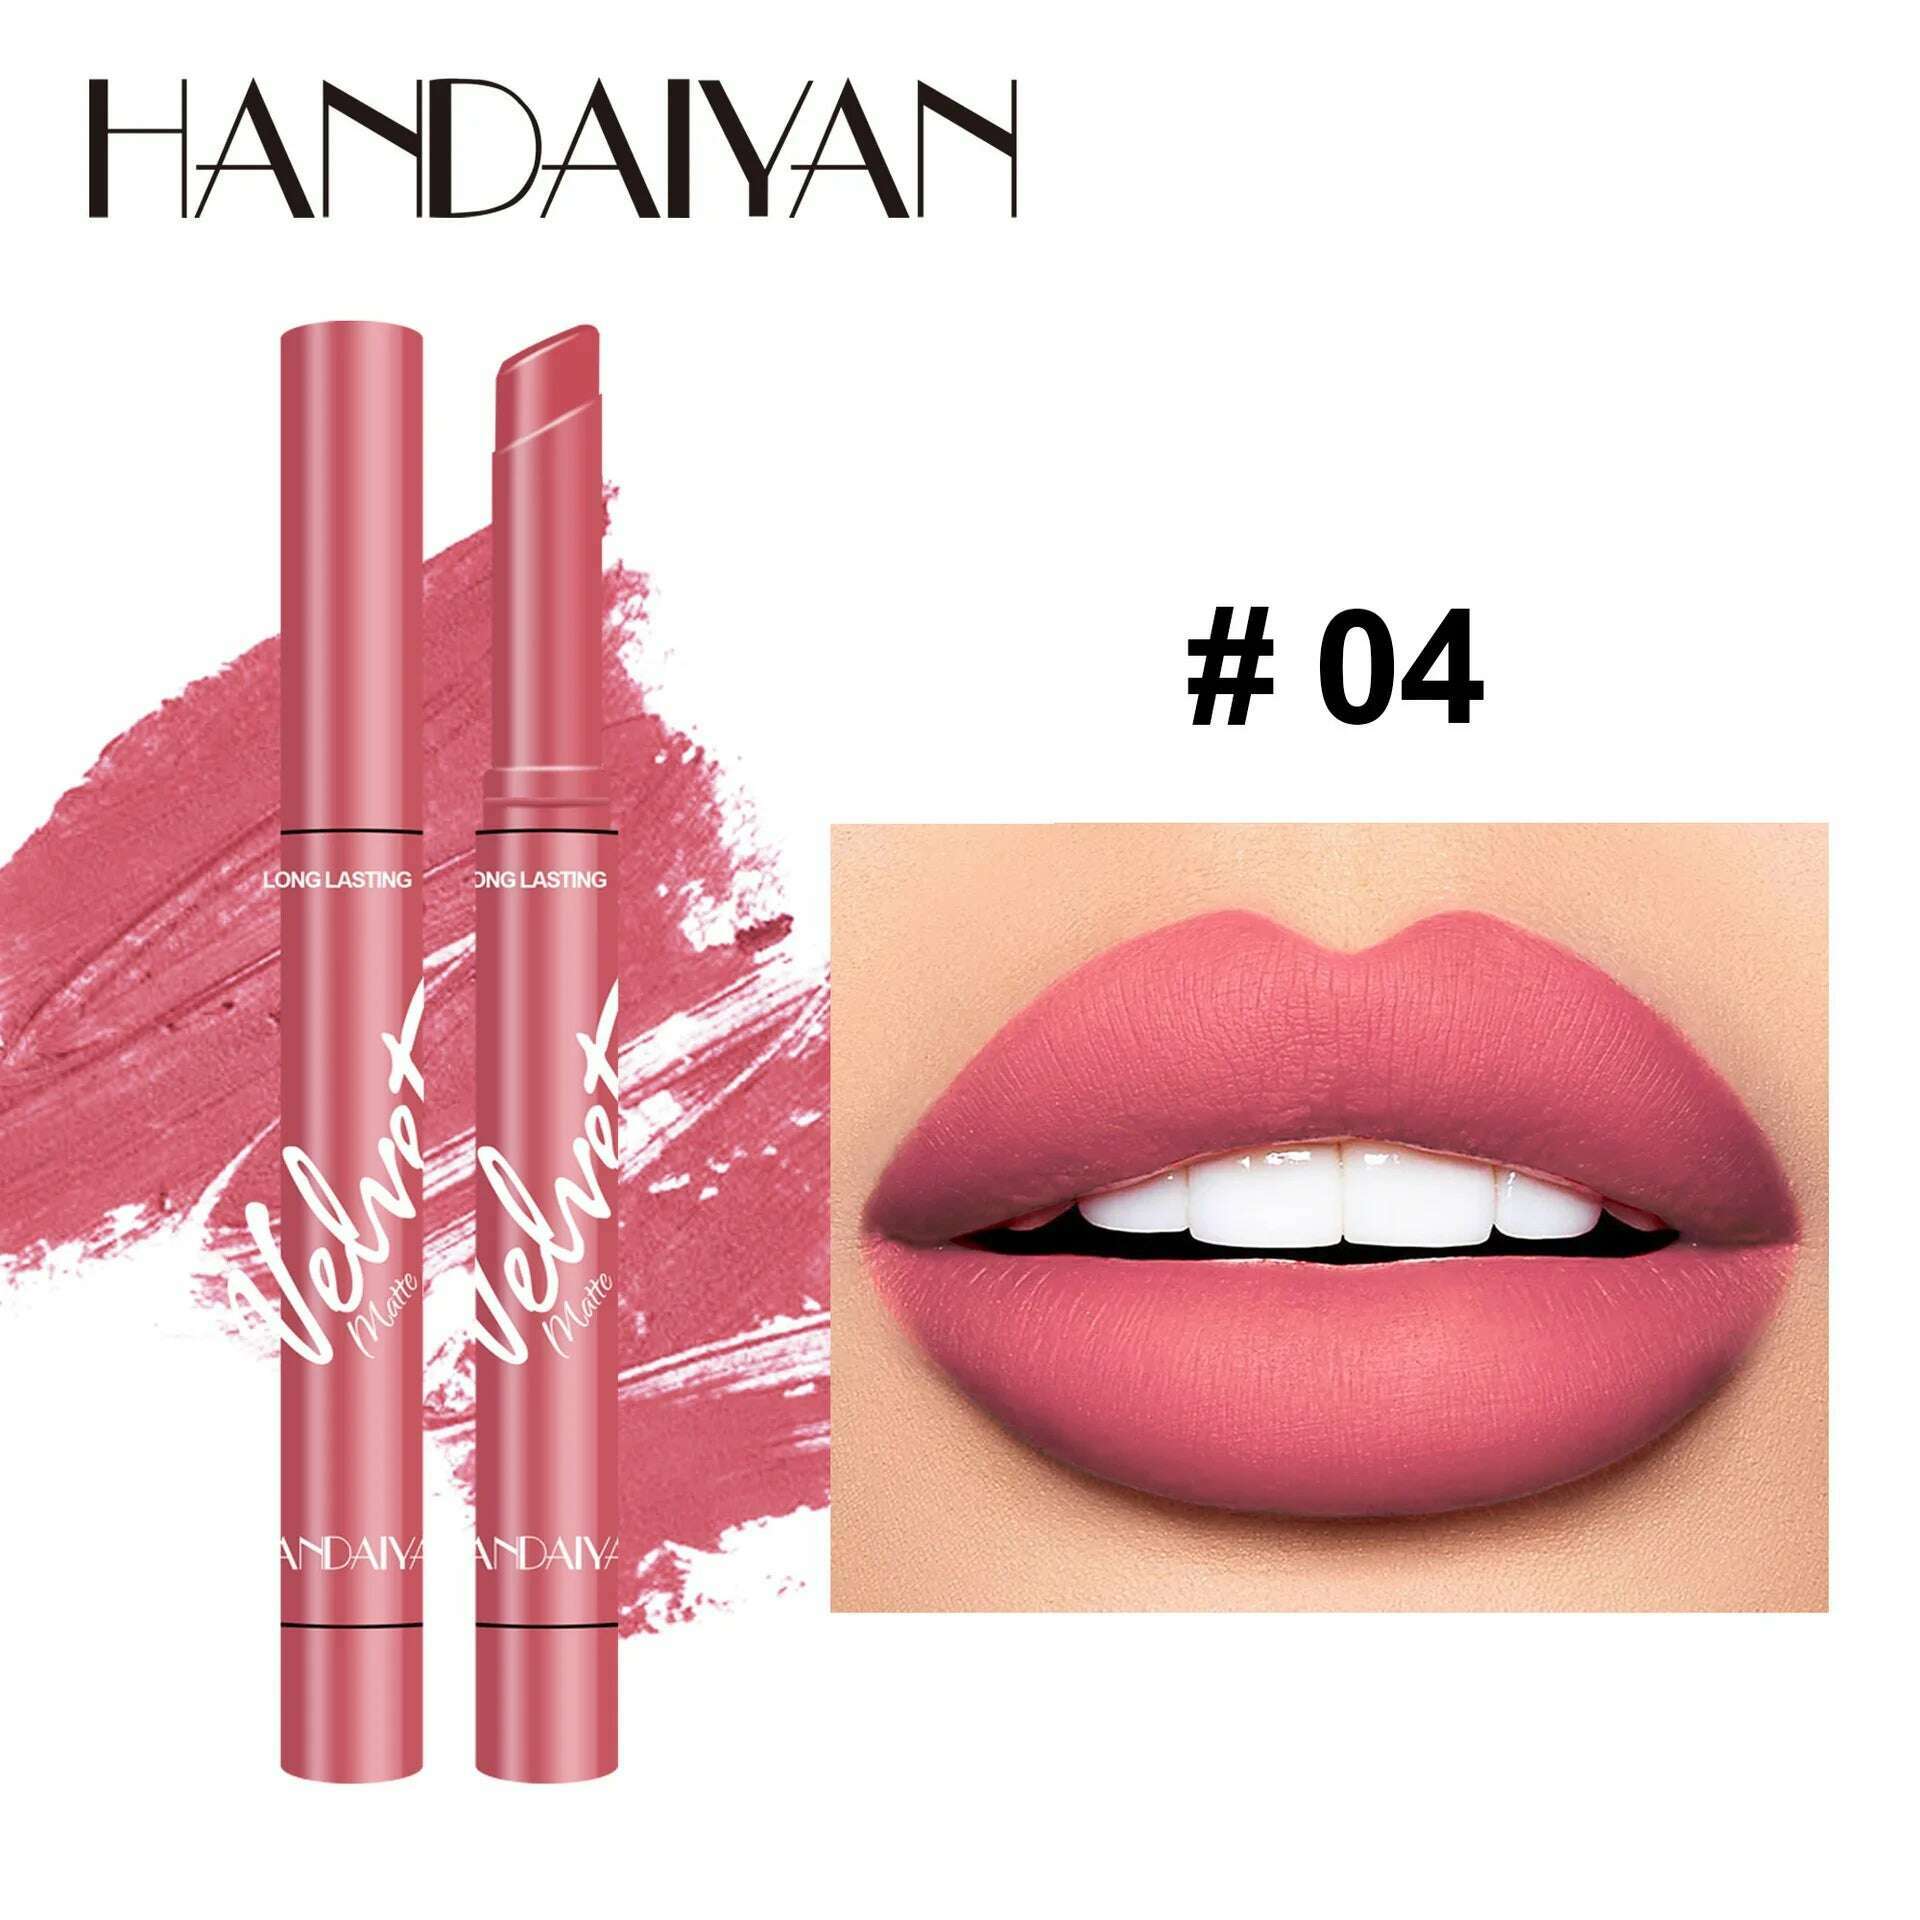 KIMLUD, Handaiyan 8 Colors Matte Waterproof Velvet Nude Lipstick Pink Red Sexy Lip Matt Long Lasting Pigments Makeup, 04, KIMLUD Women's Clothes